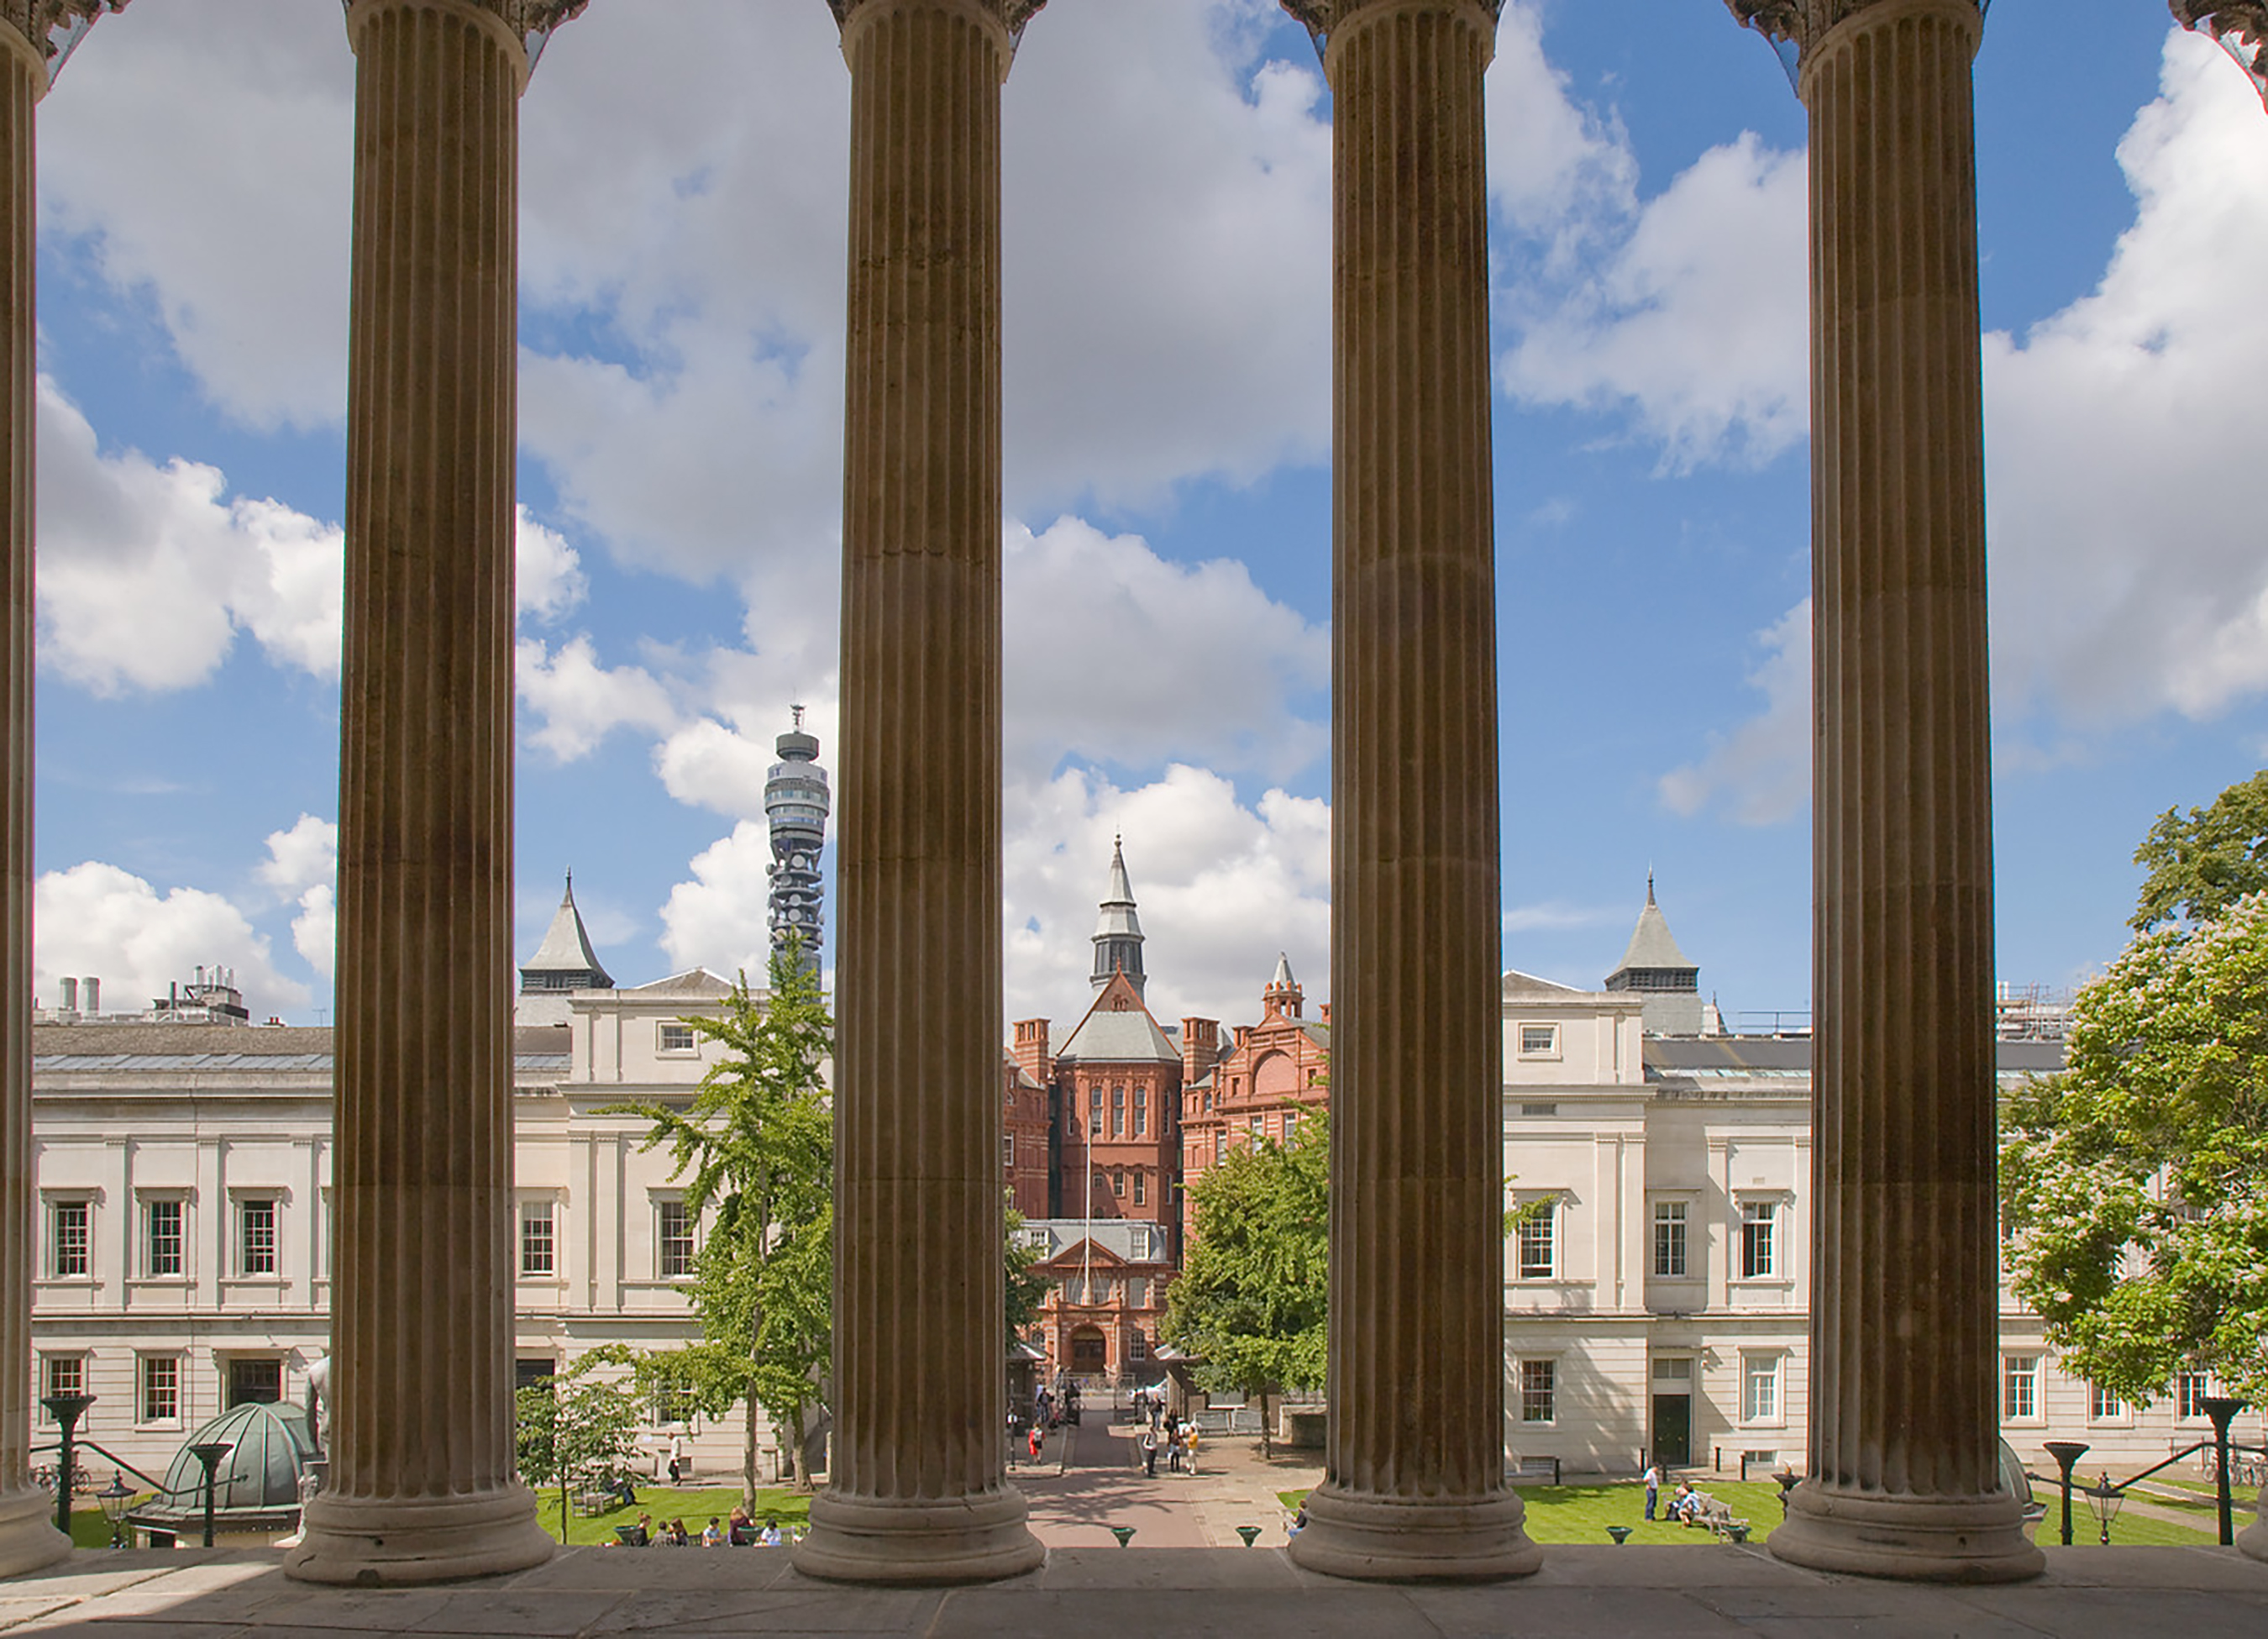 An image of UCL campus taken through building columns